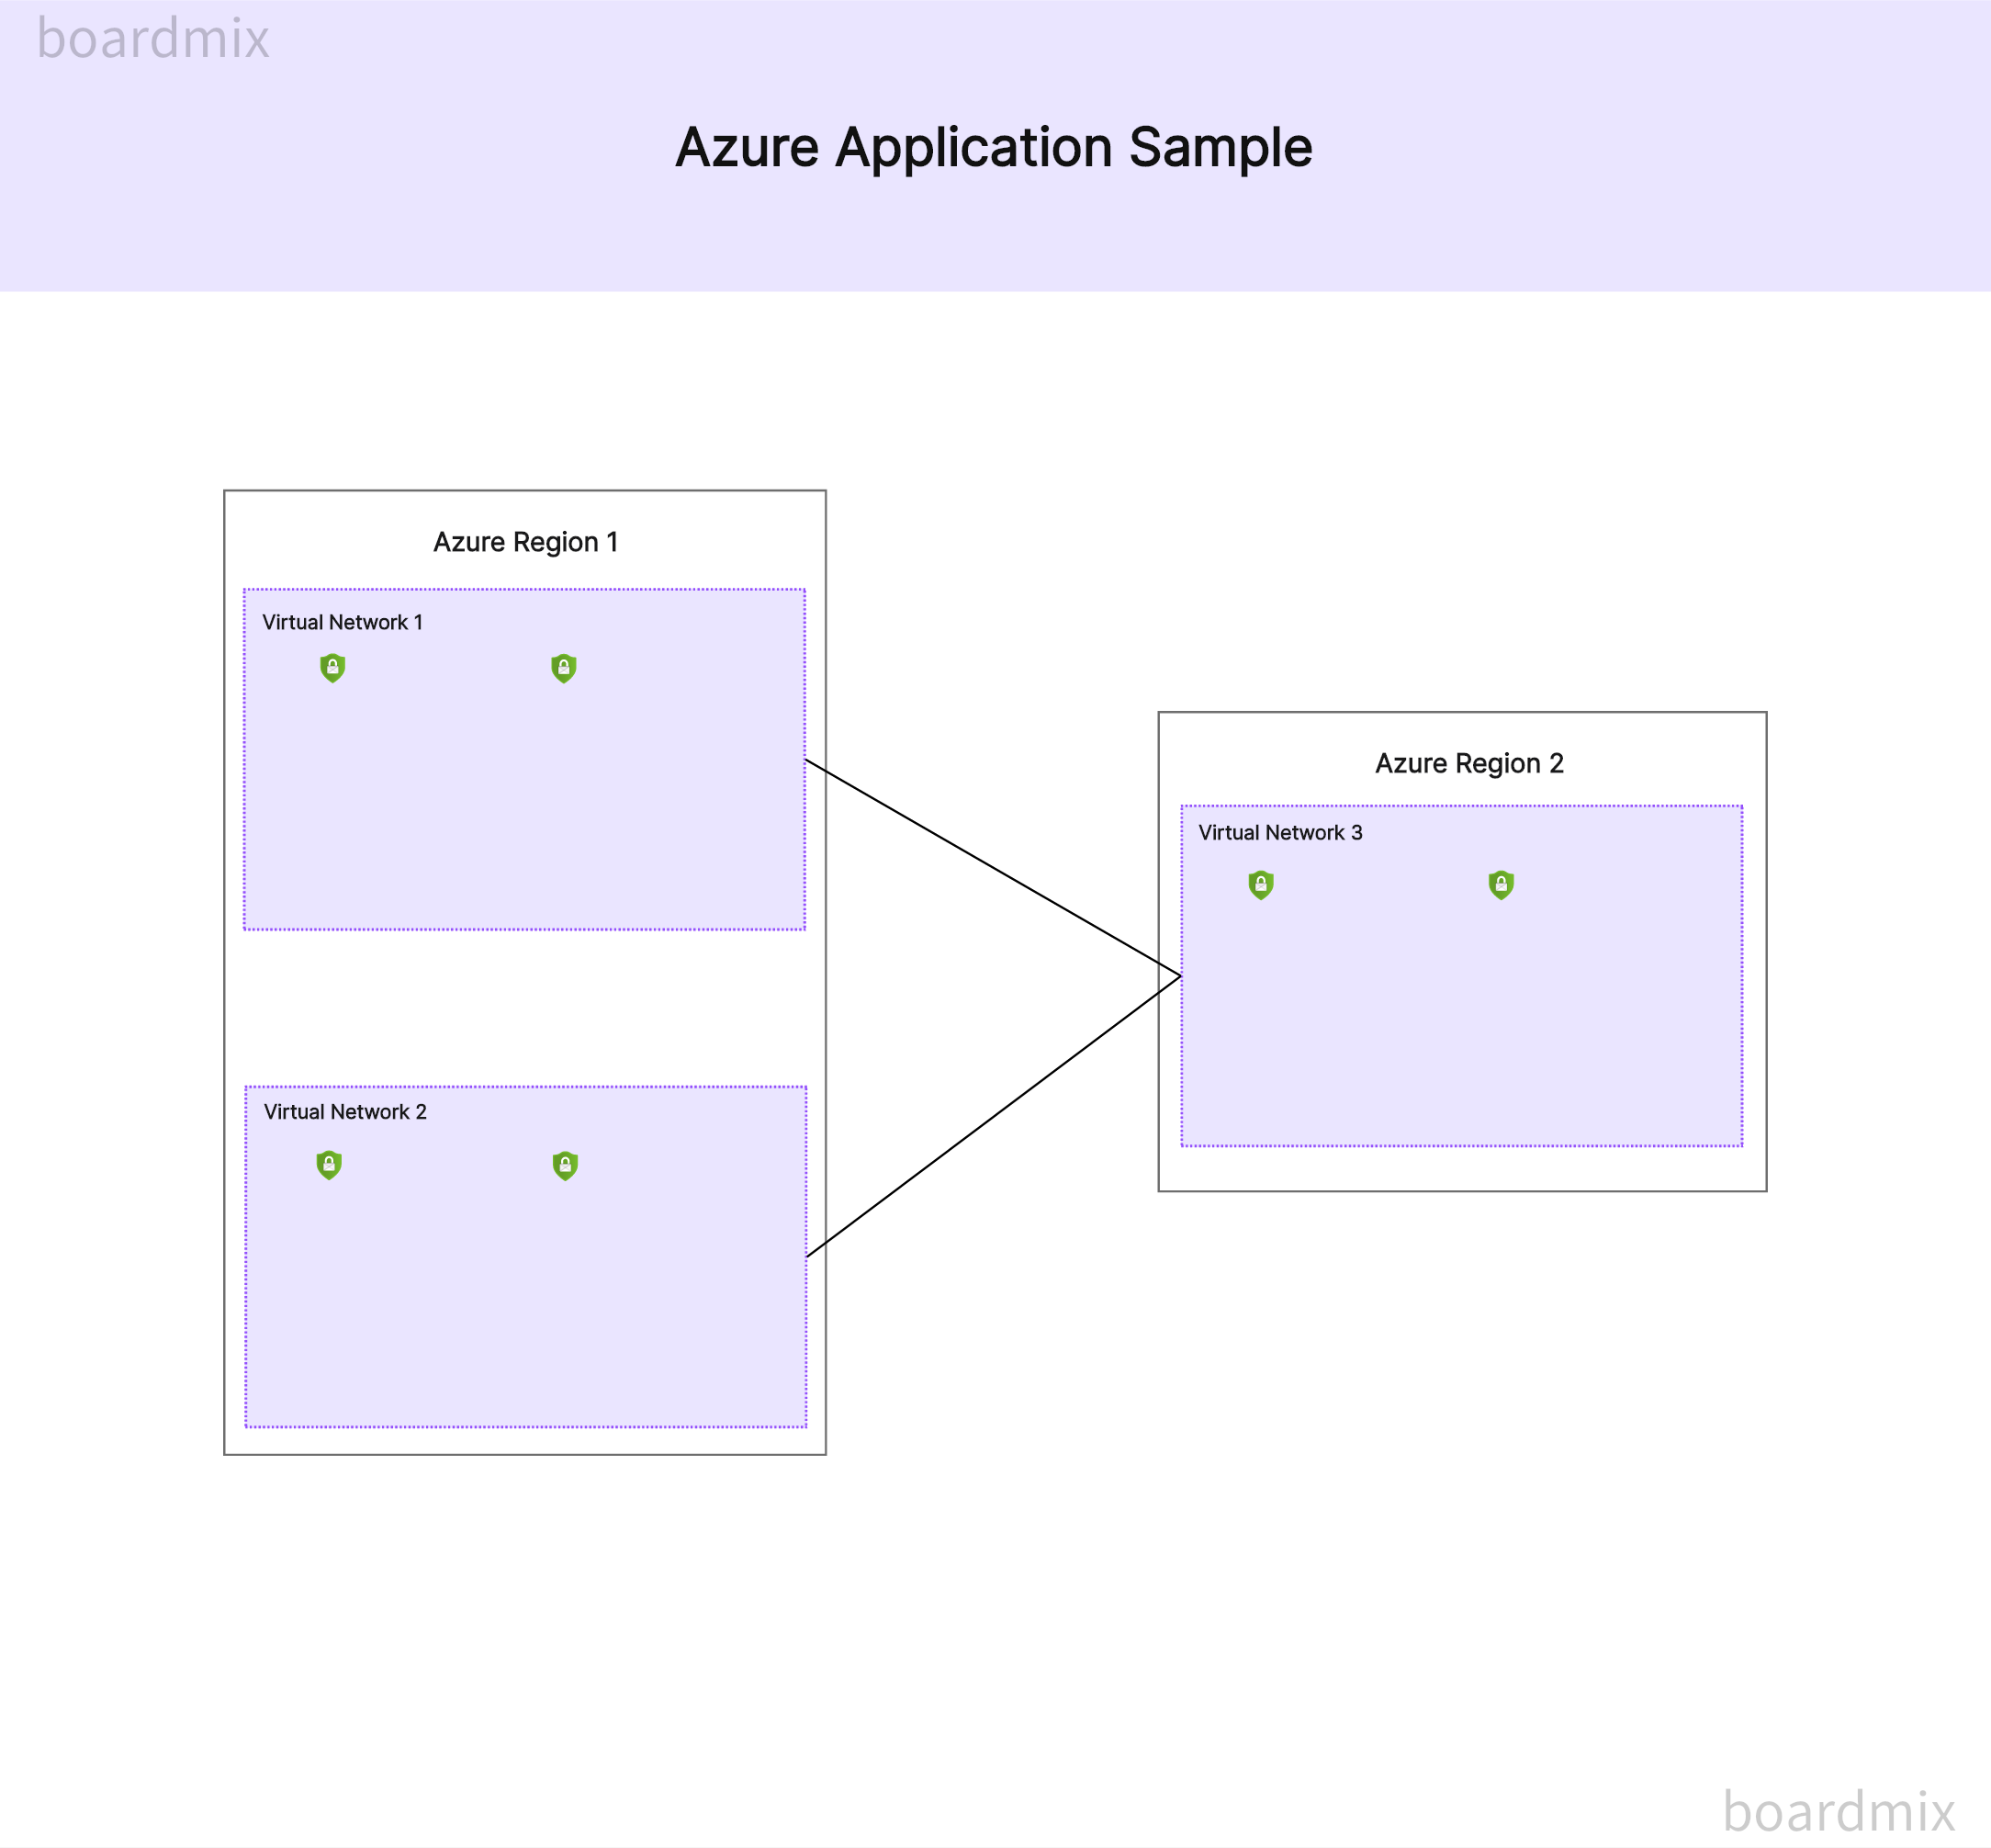 azure-application-sample-boardmix